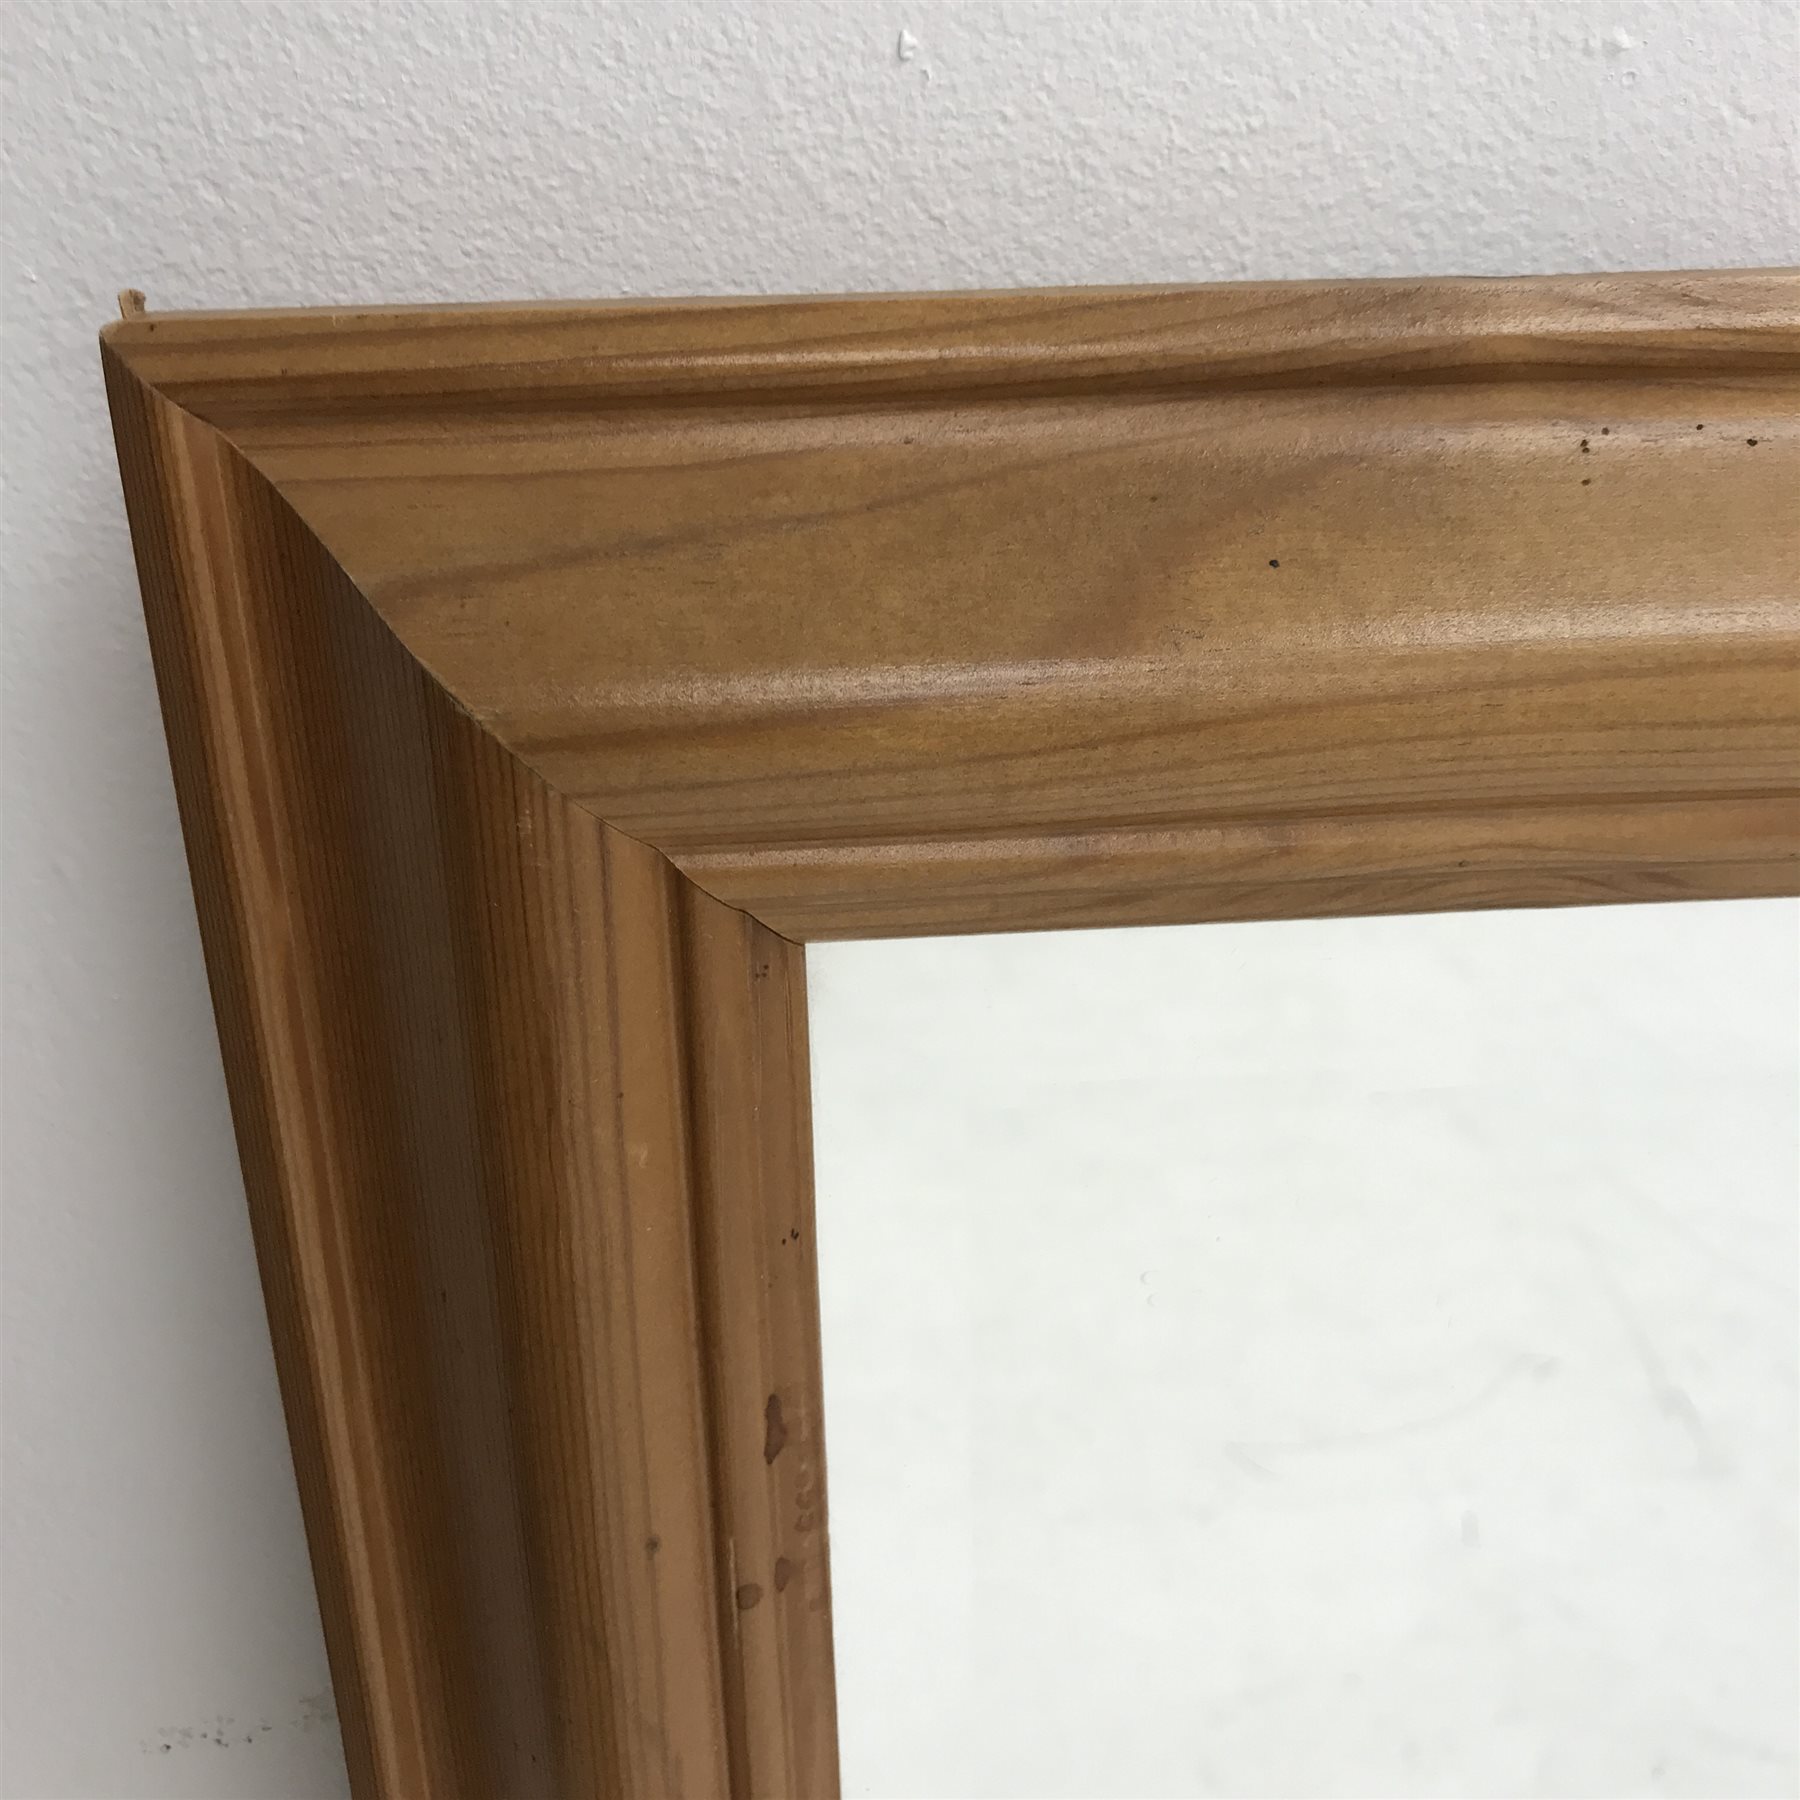 Large rectangular moulded pine framed bevel edge wall mirror, W134cm, H104cm - Image 2 of 2